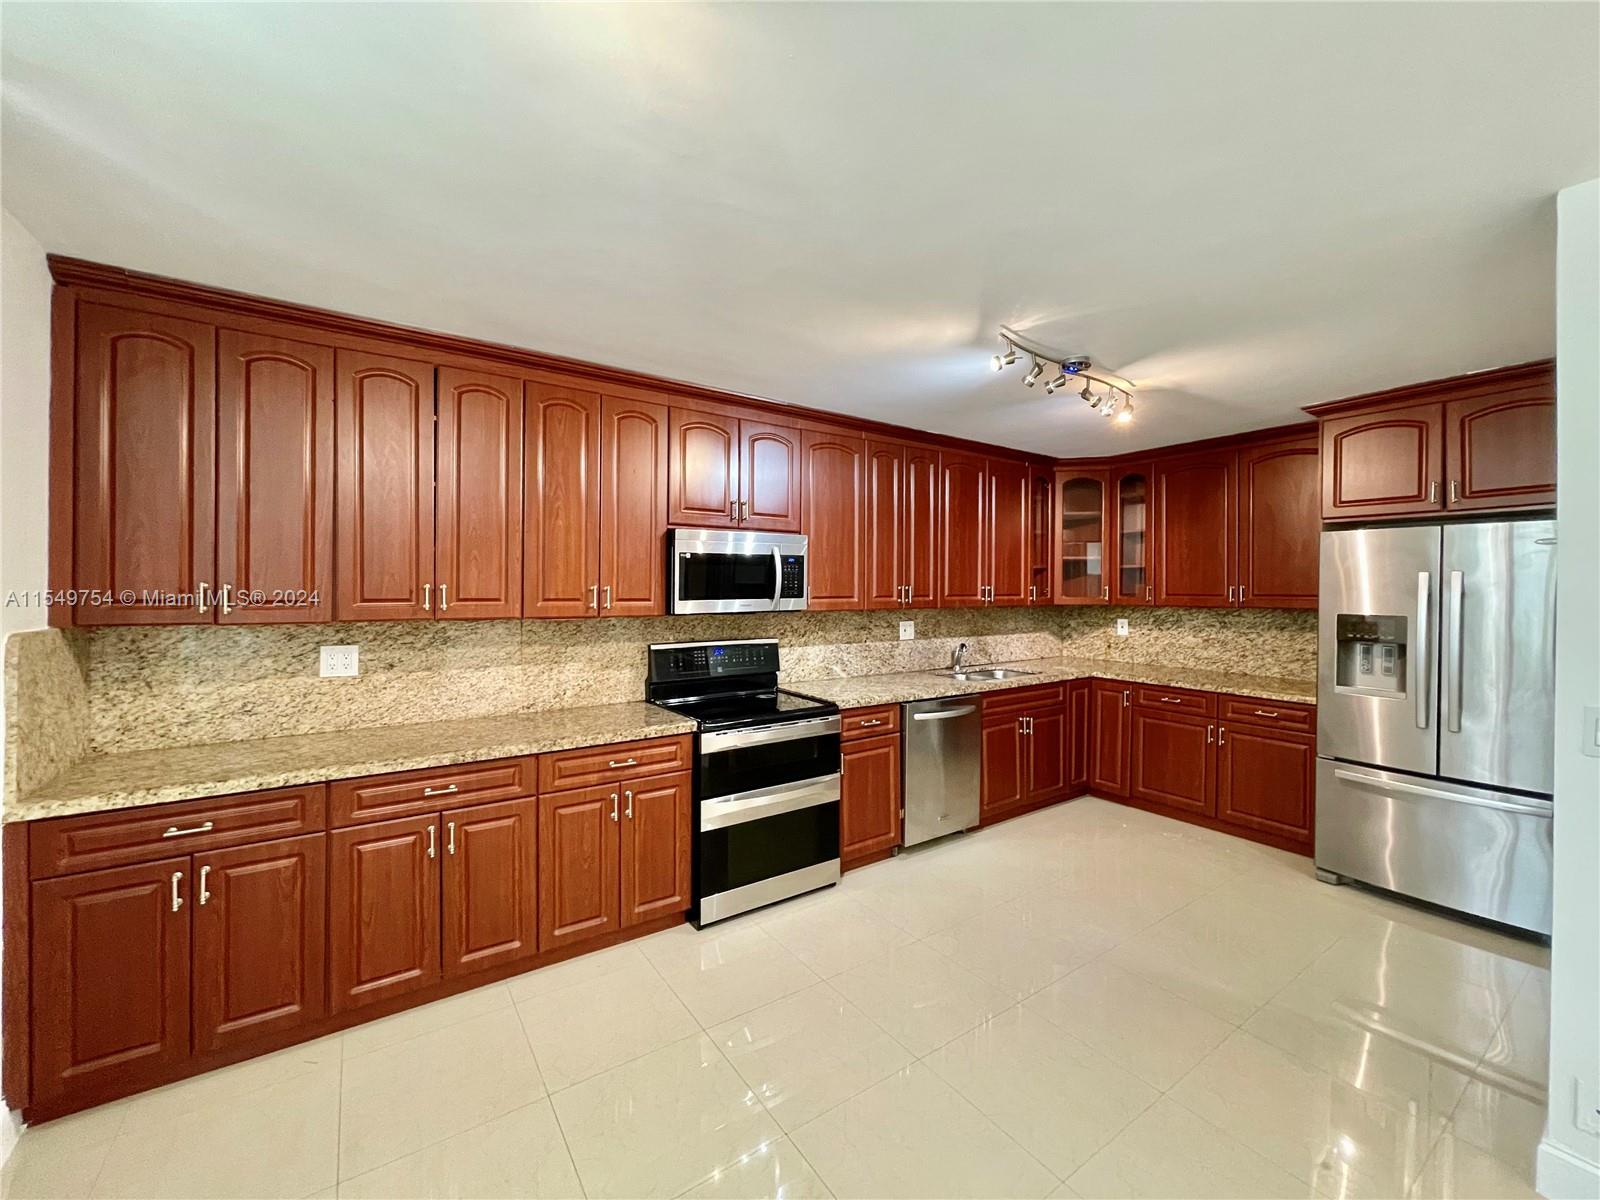 Property for Sale at 20441 Ne 30th Ave 122-9, Aventura, Miami-Dade County, Florida - Bedrooms: 3 
Bathrooms: 2  - $399,000